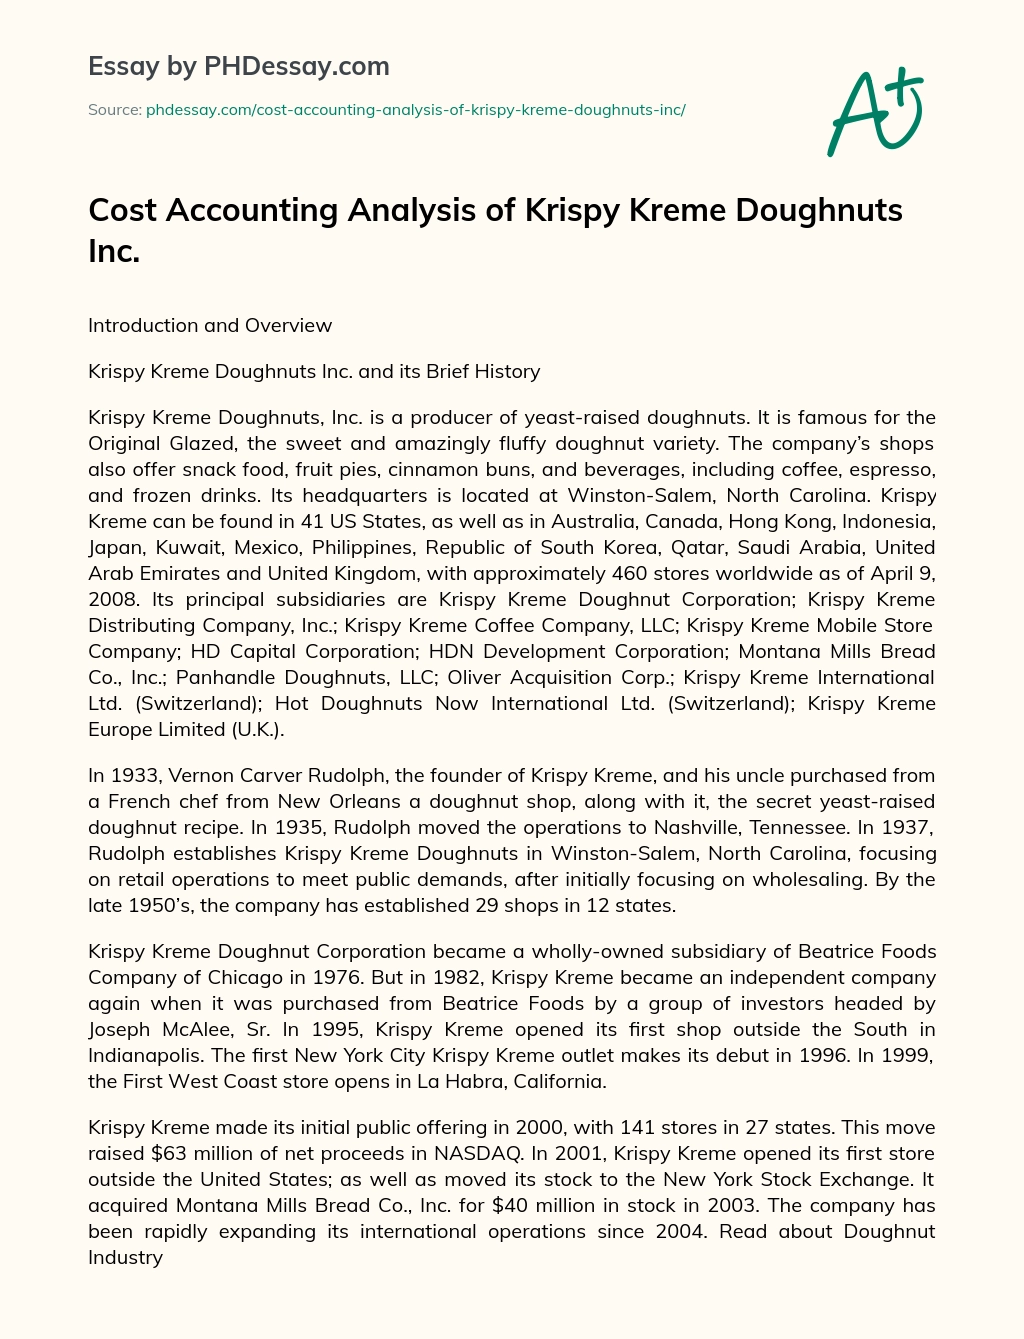 Cost Accounting Analysis of Krispy Kreme Doughnuts Inc. essay